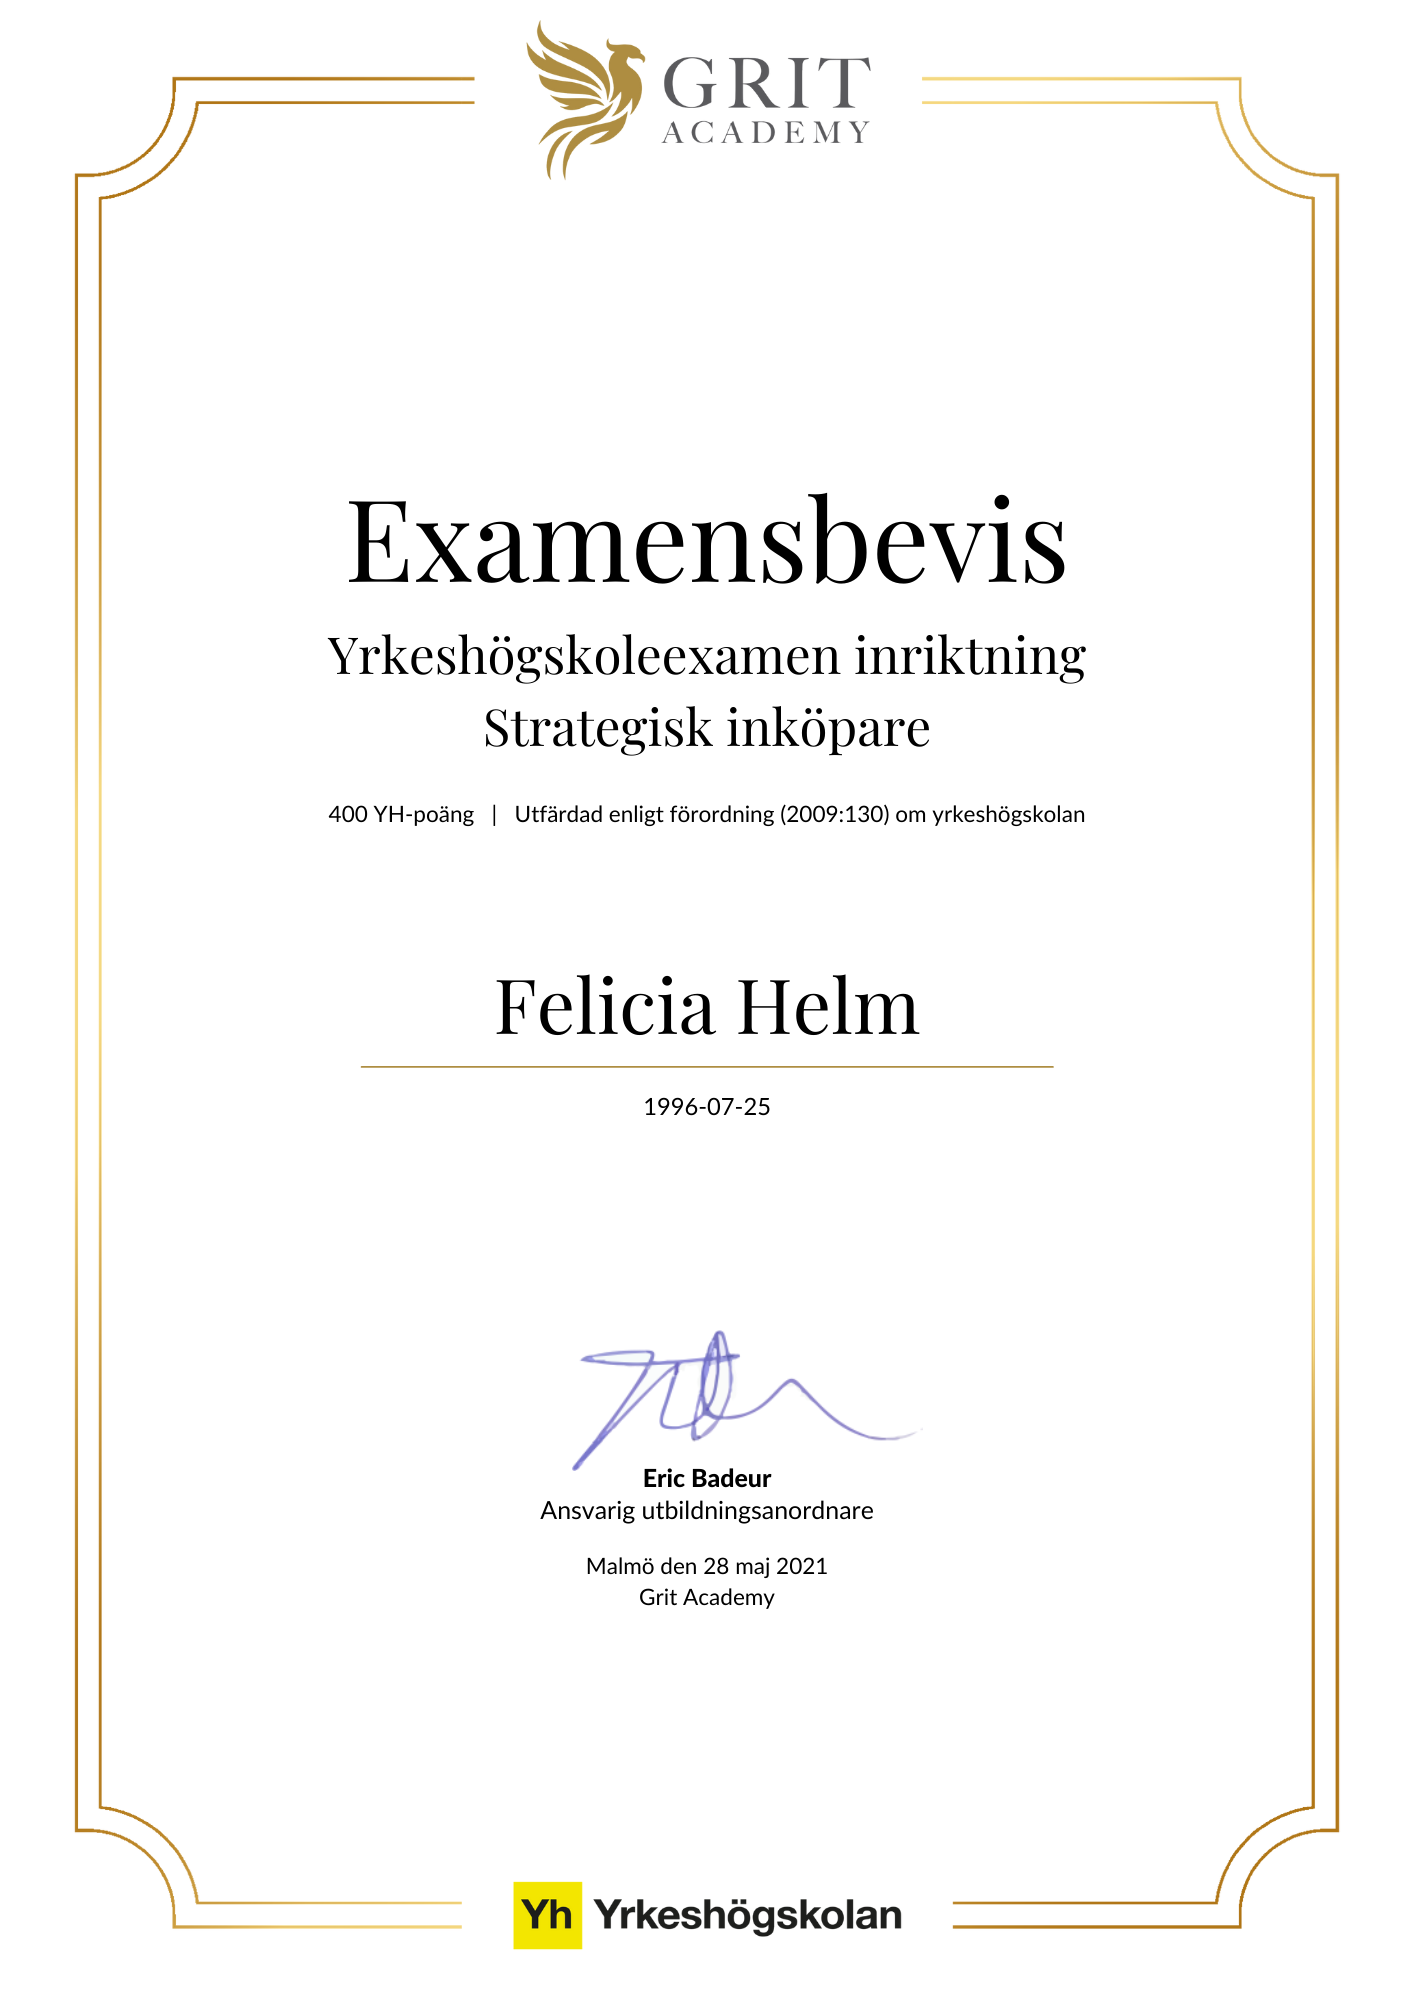 Examensbevis Felicia Helm - 1